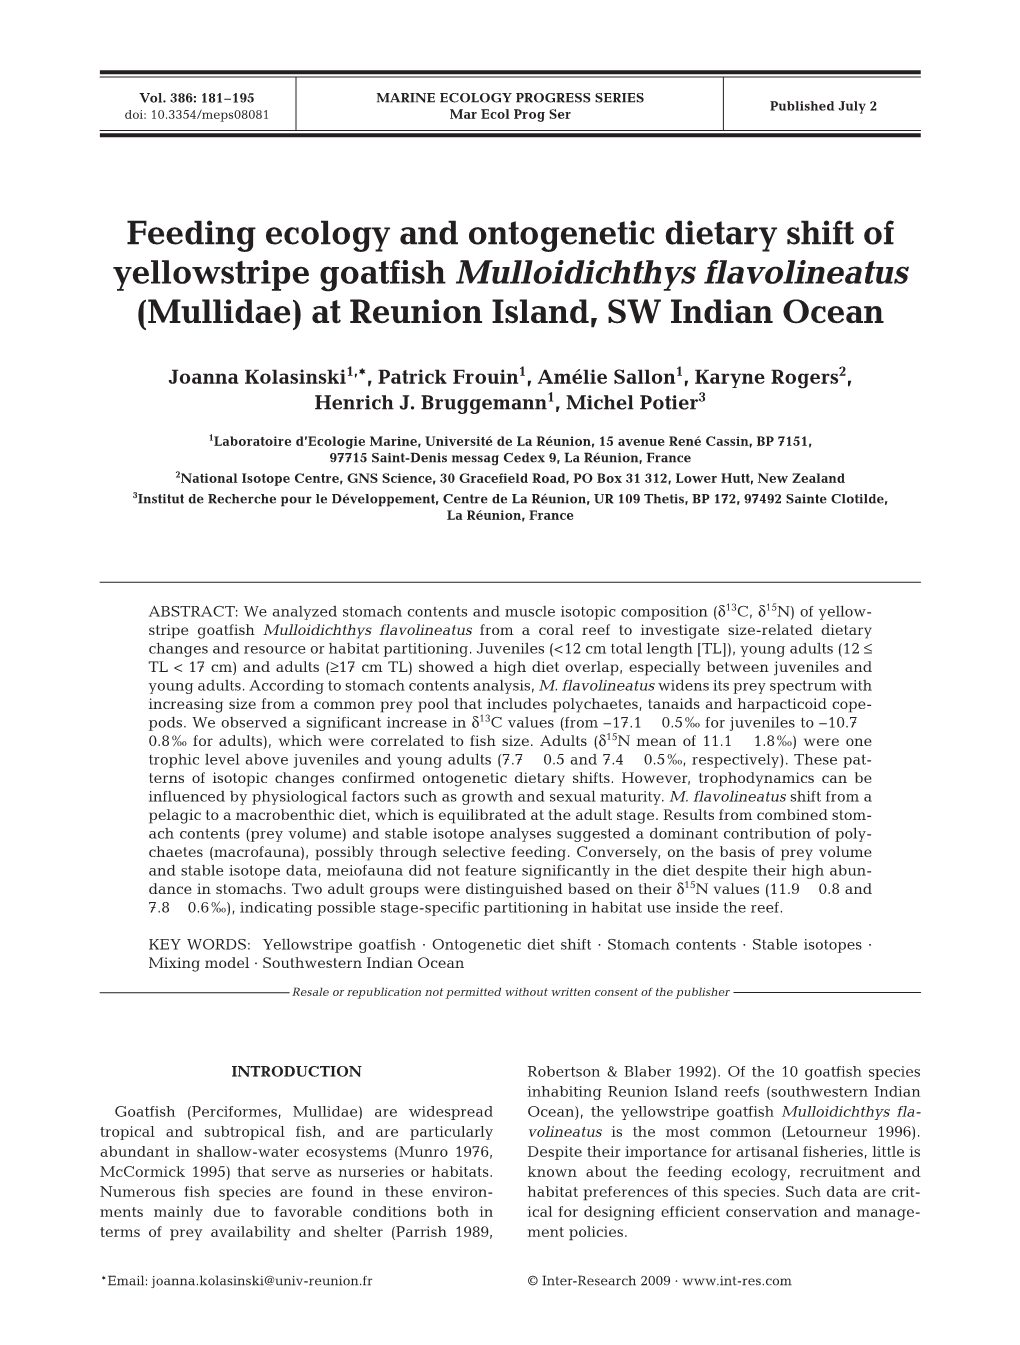 Feeding Ecology and Ontogenetic Dietary Shift of Yellowstripe Goatfish Mulloidichthys Flavolineatus (Mullidae) at Reunion Island, SW Indian Ocean